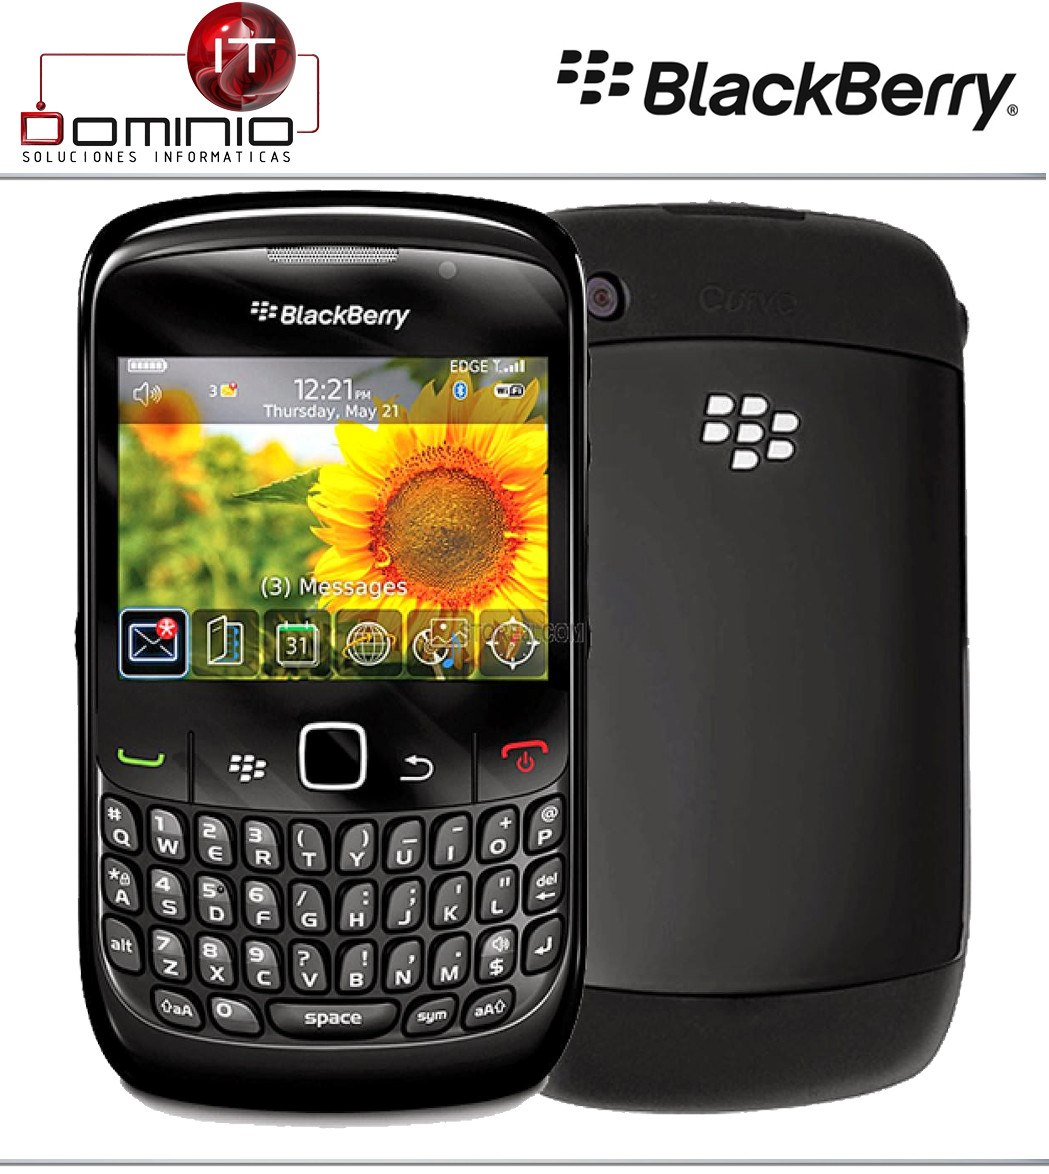 descargar whatsapp gratis blackberry 8520